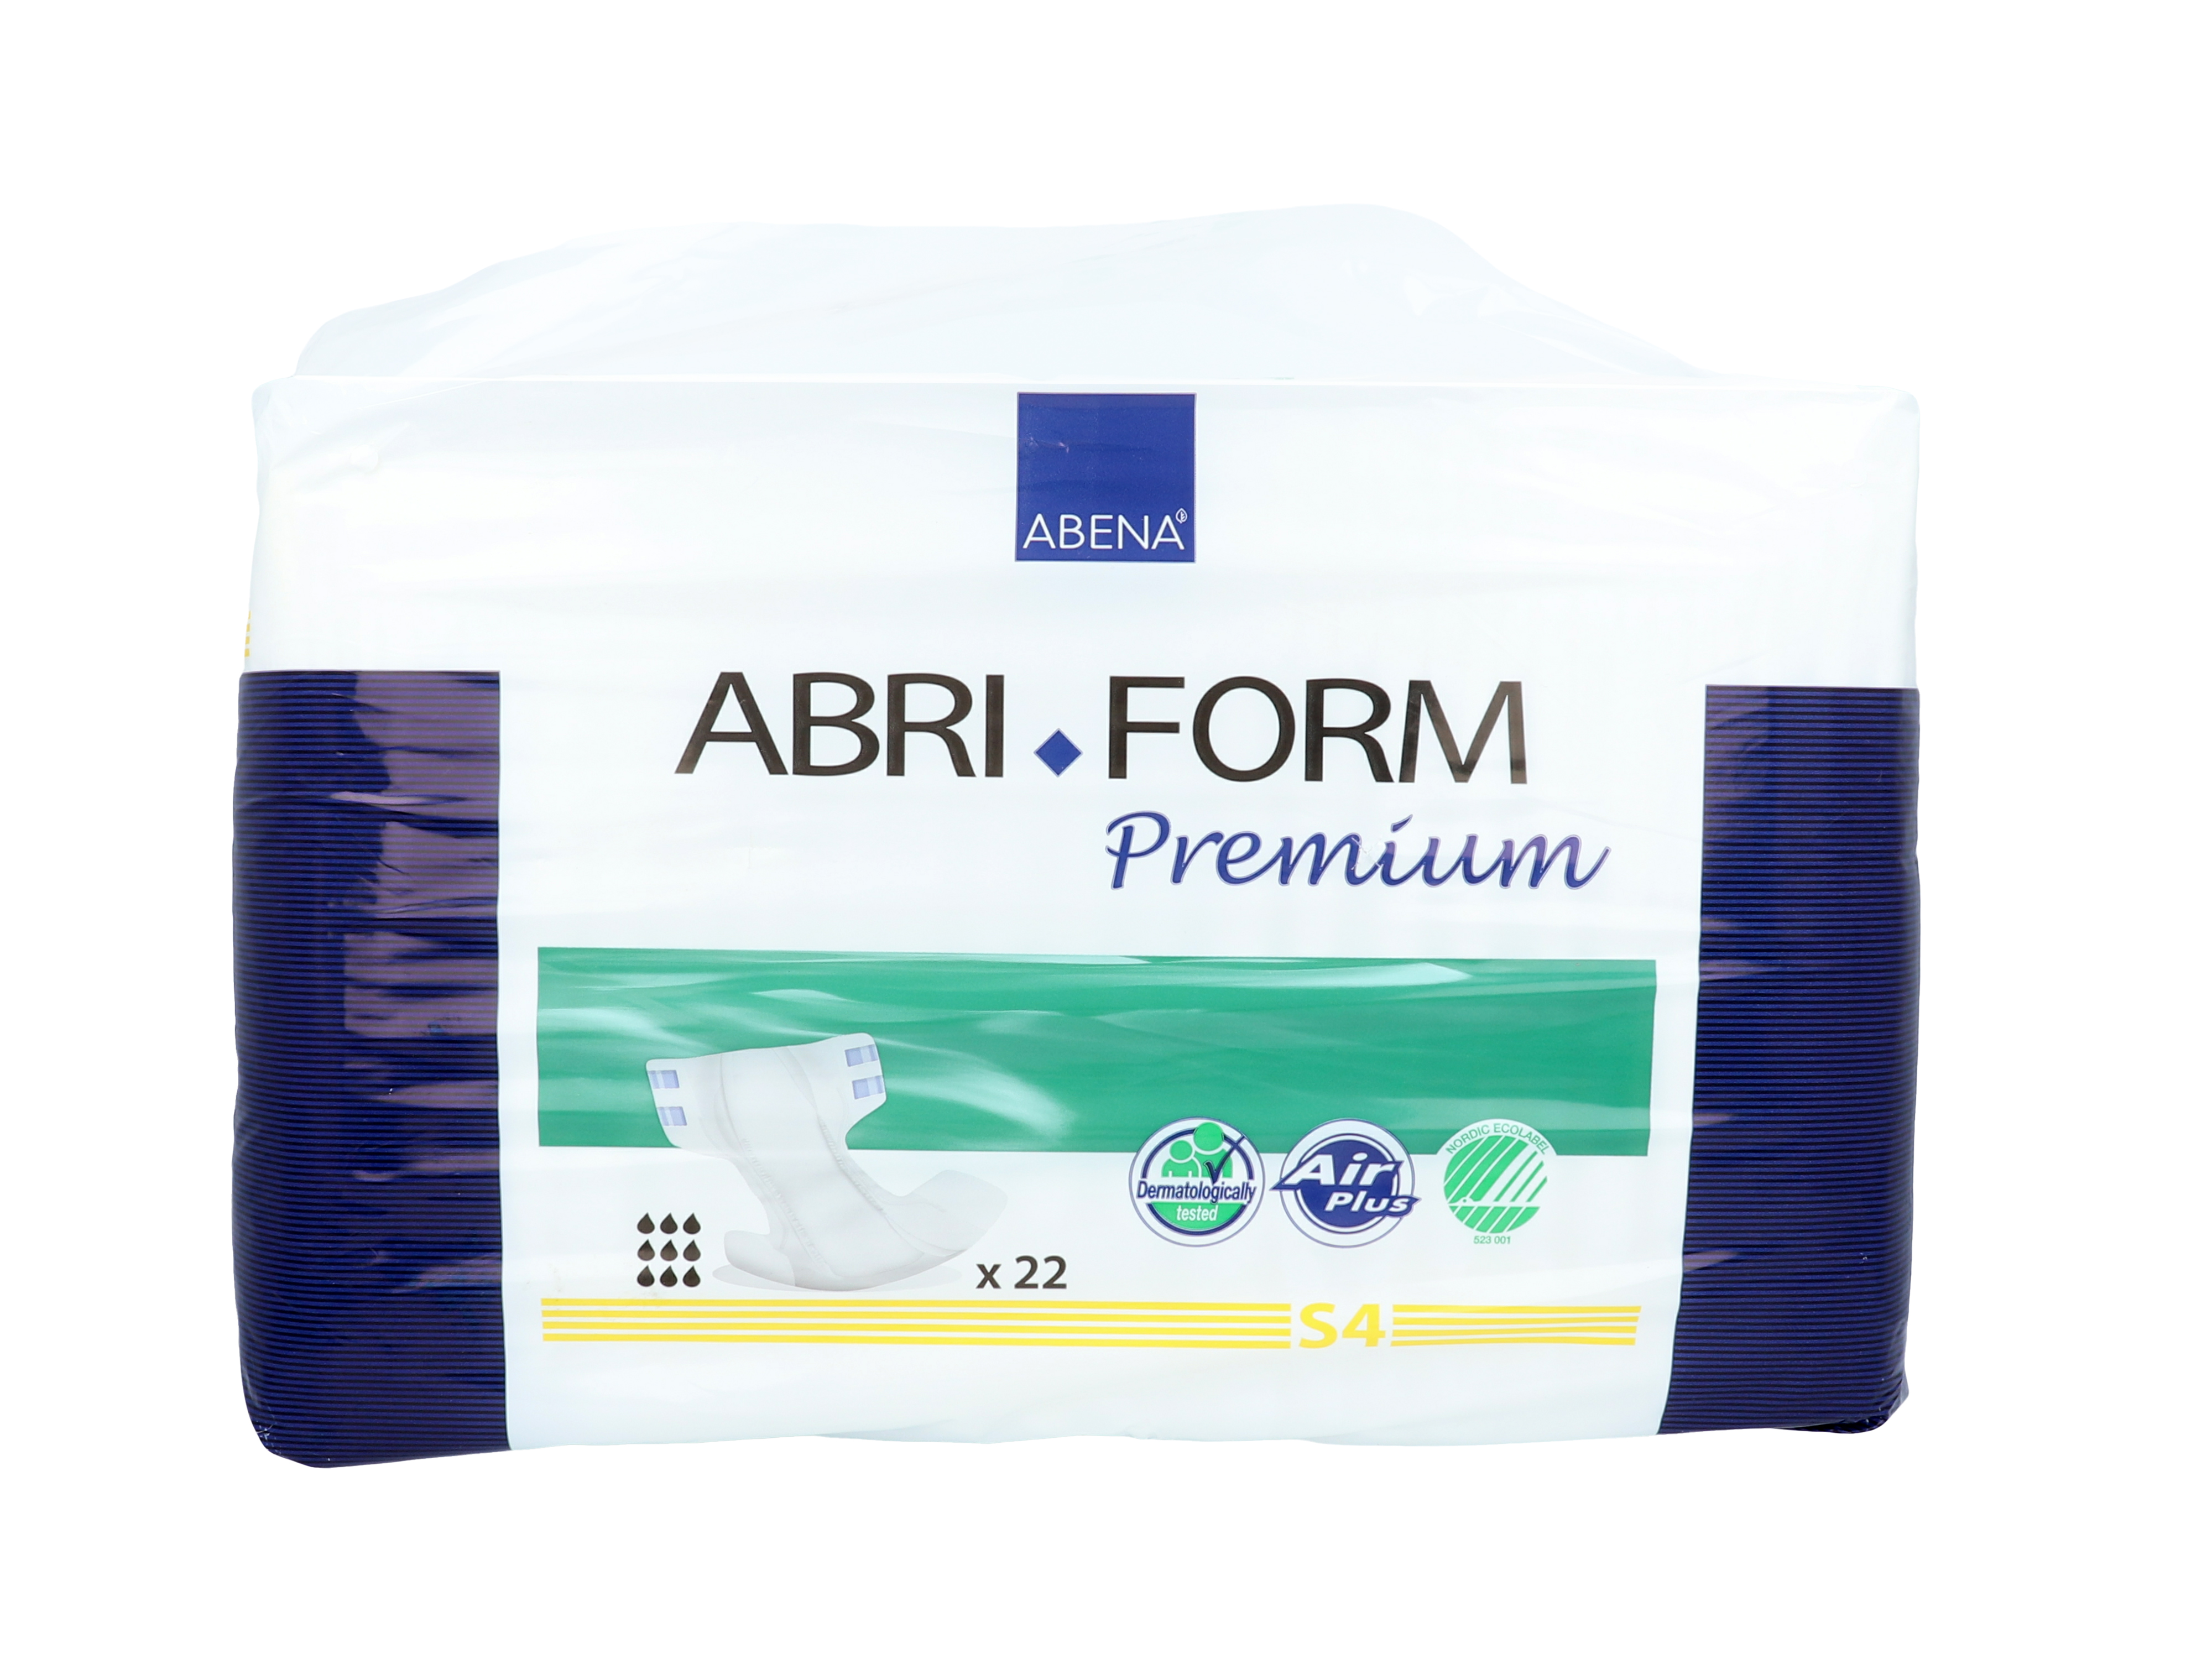 Abri-Form S4 Premium, 22 stk.